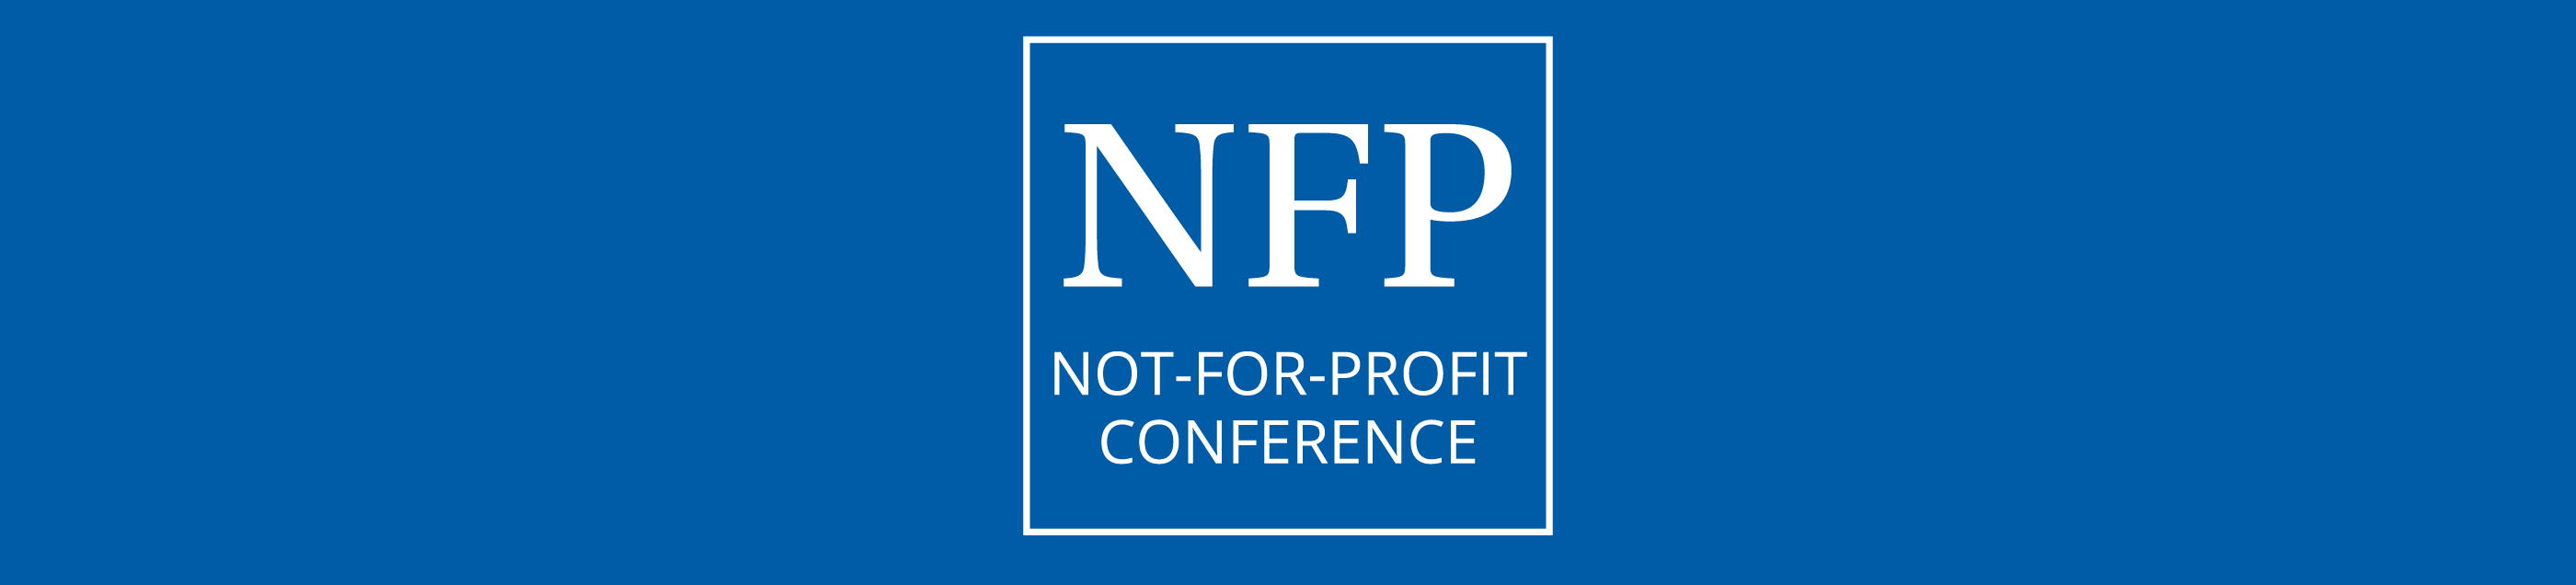 NotforProfit Conference